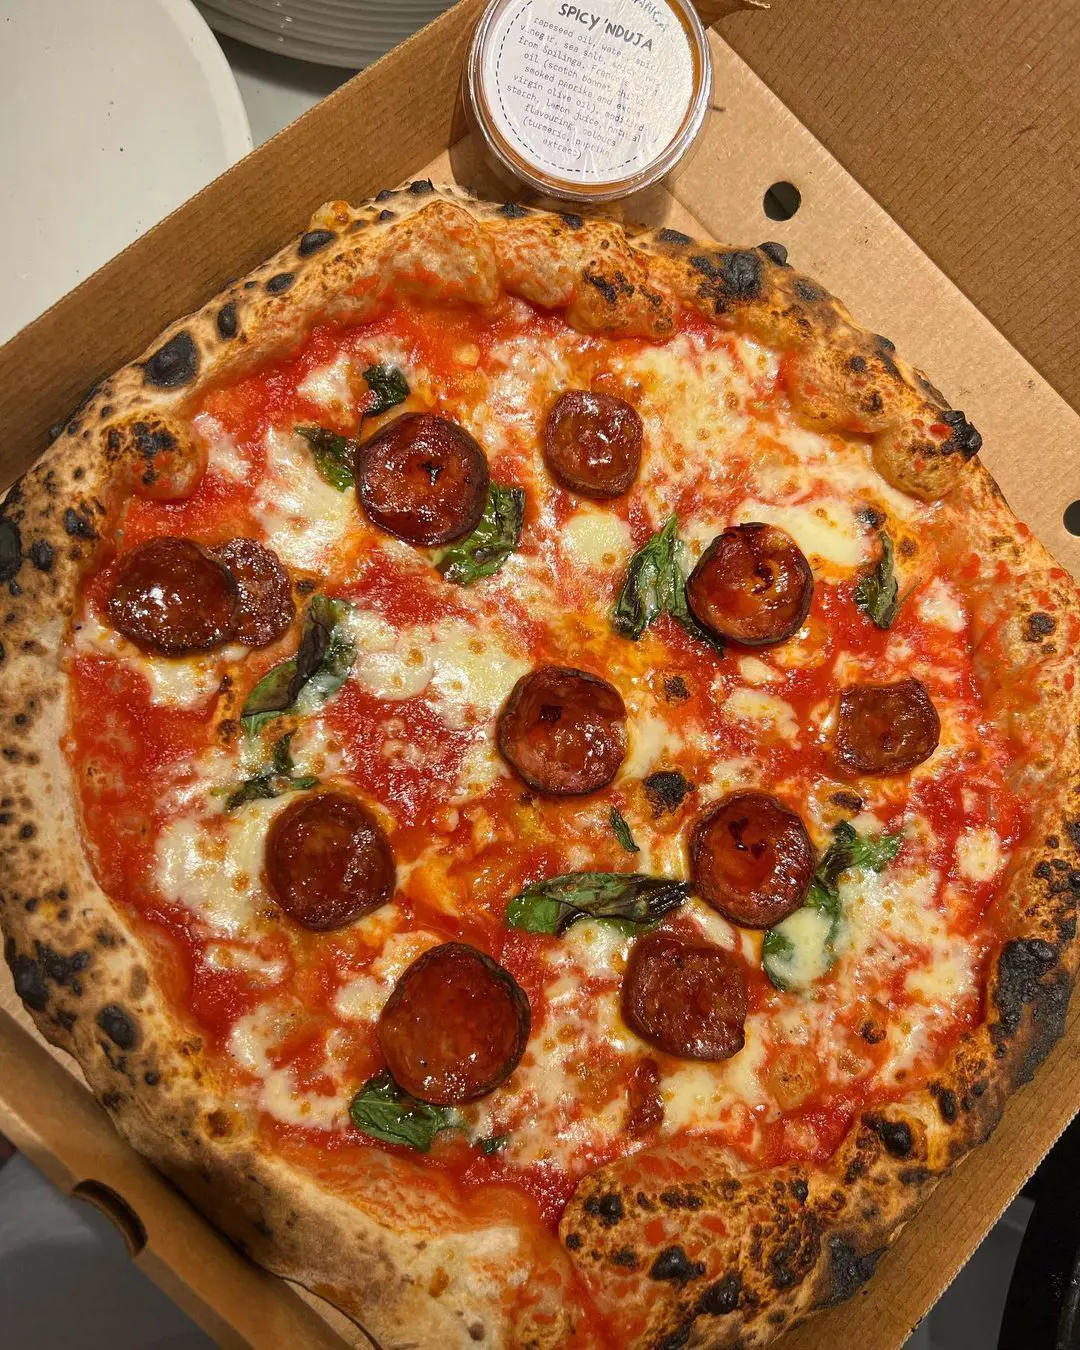 No.6 Chorizo pizza